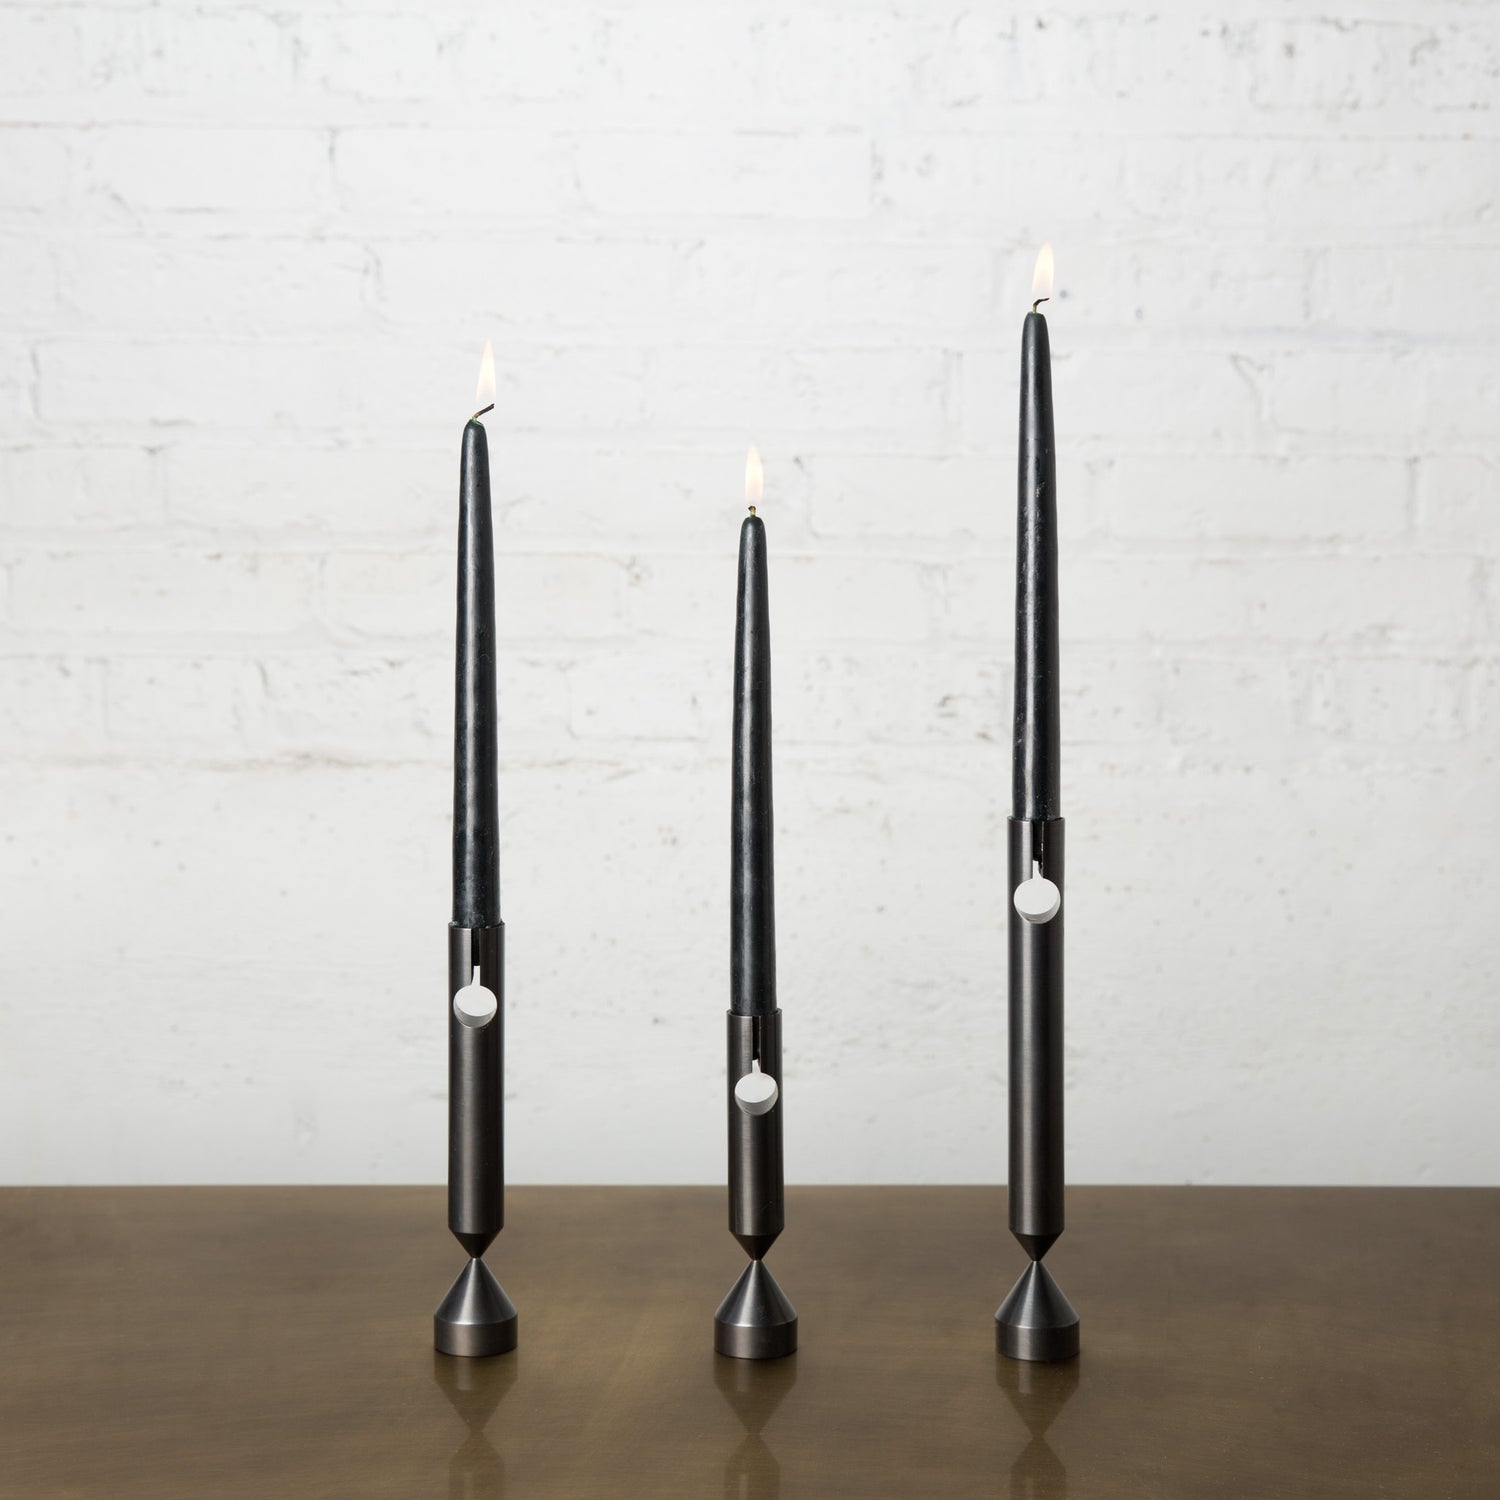 Pillar Candlesticks by Gentner